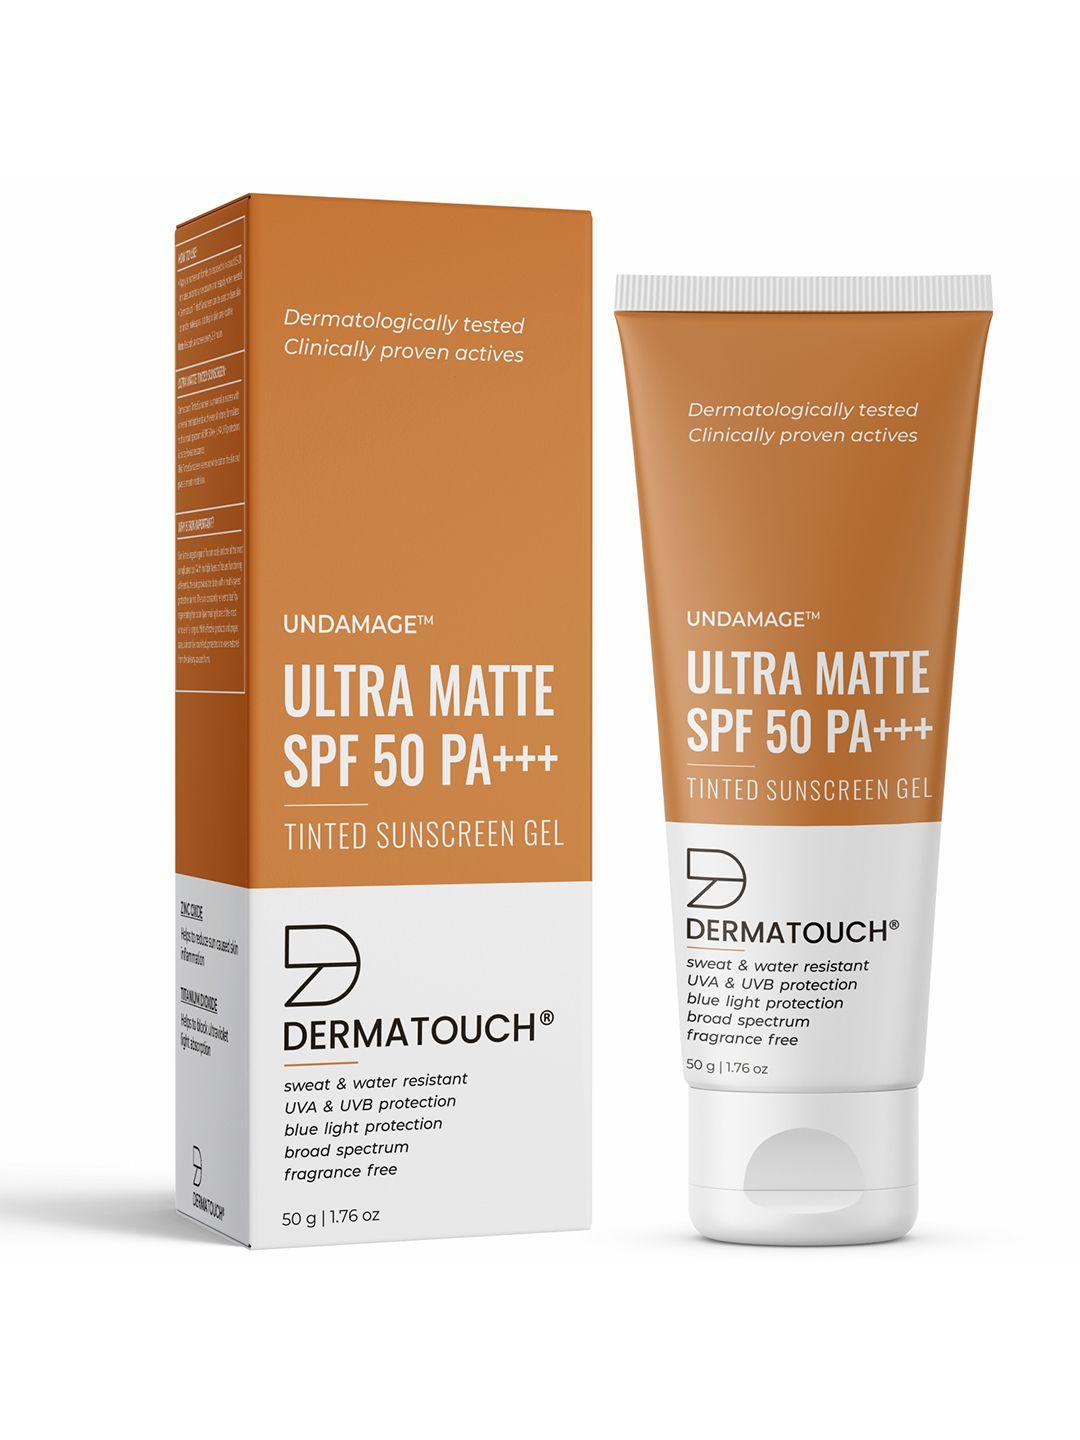 dermatouch undamage water & sweat resistant ultra matte tinted sunscreen spf 50 pa+++